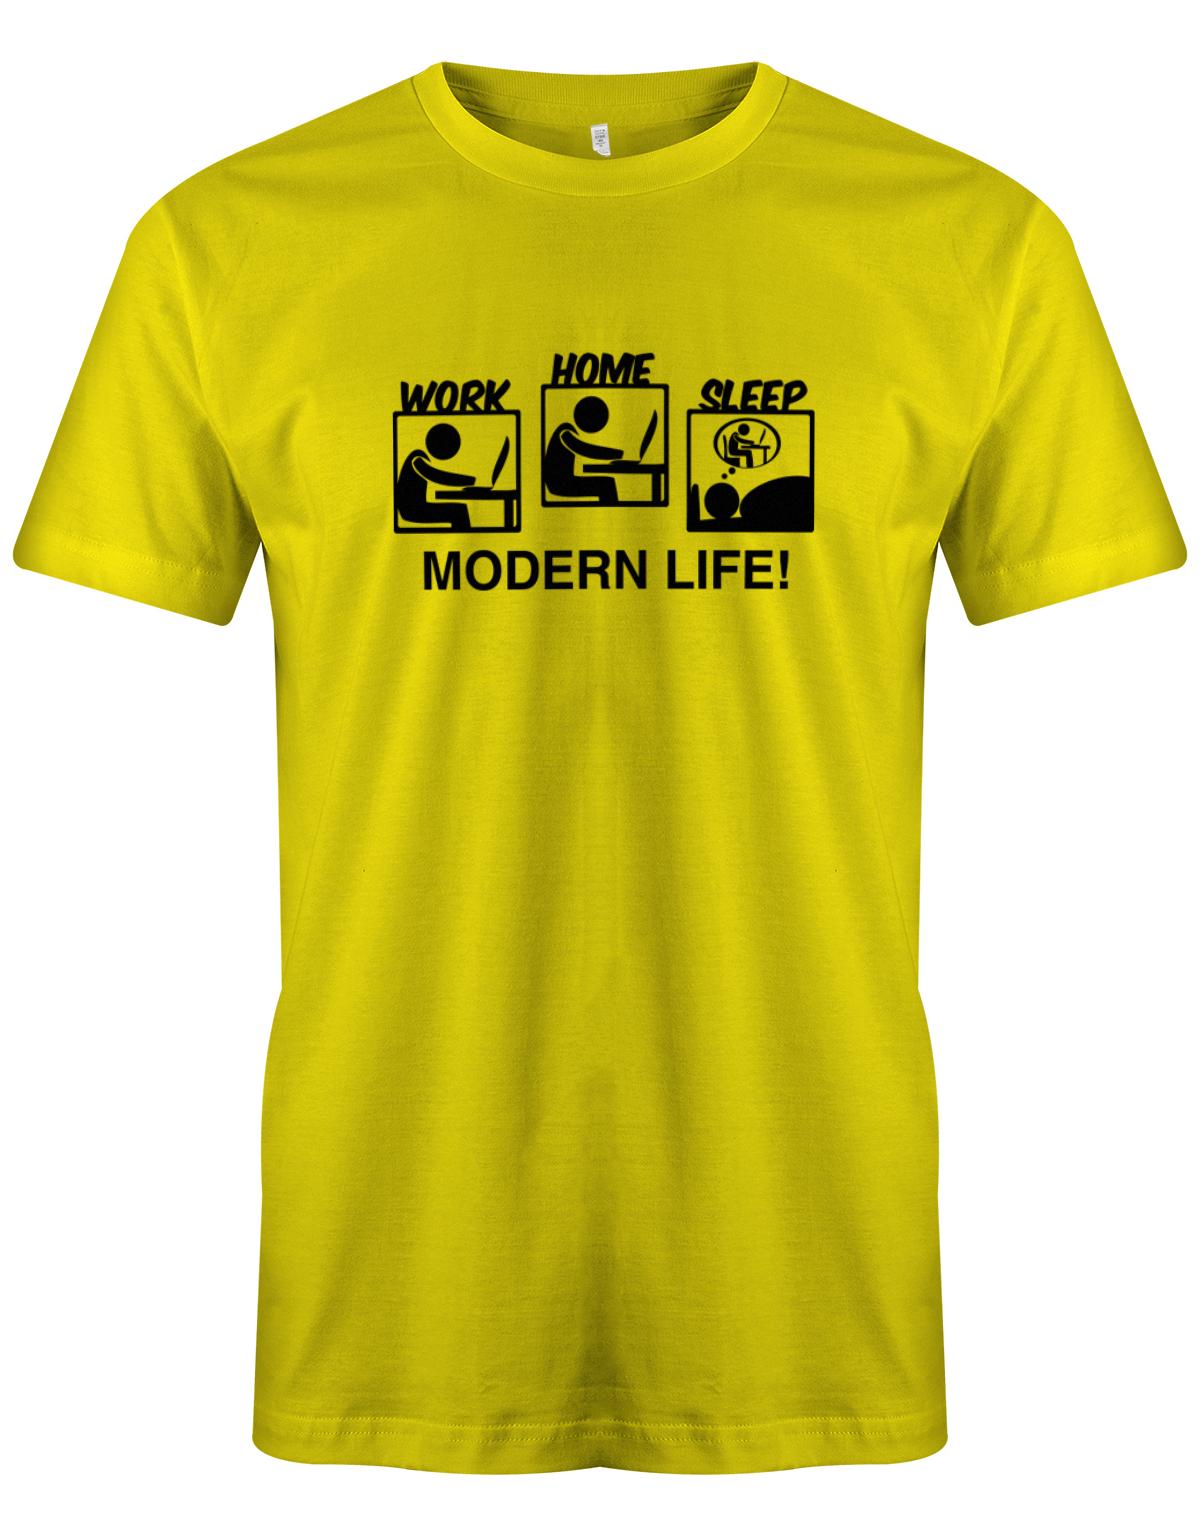 Modern-Life-Work-Home-Sleep-Herren-Gamer-Shirt-Gelb